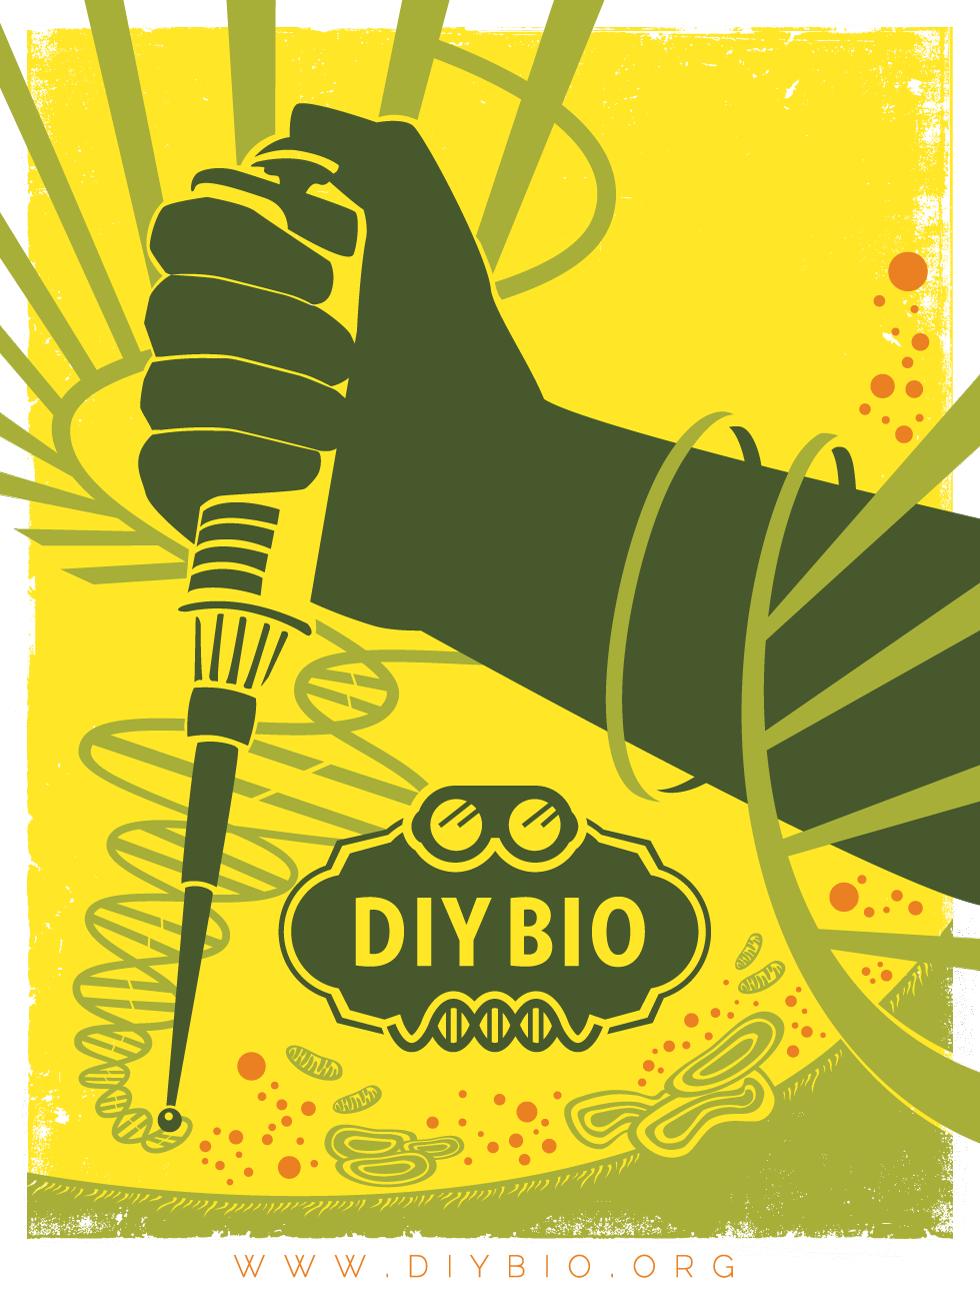 diybio-revolution-poster